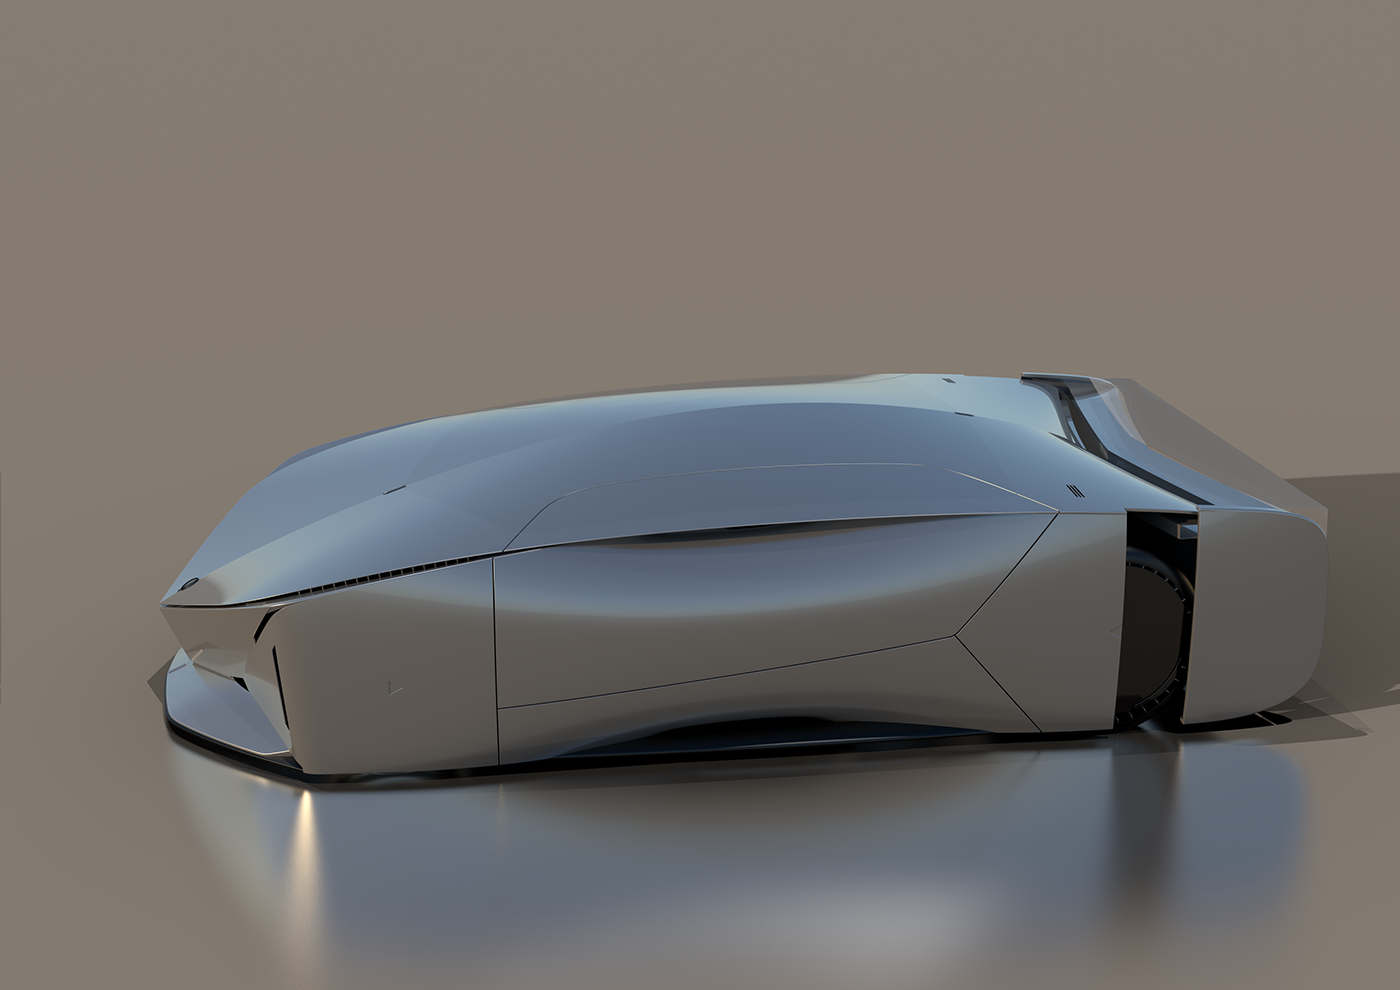 Vehicle Design car design Transportation Design futuristic design Minimalism simplicity vision graphic design  sculptural